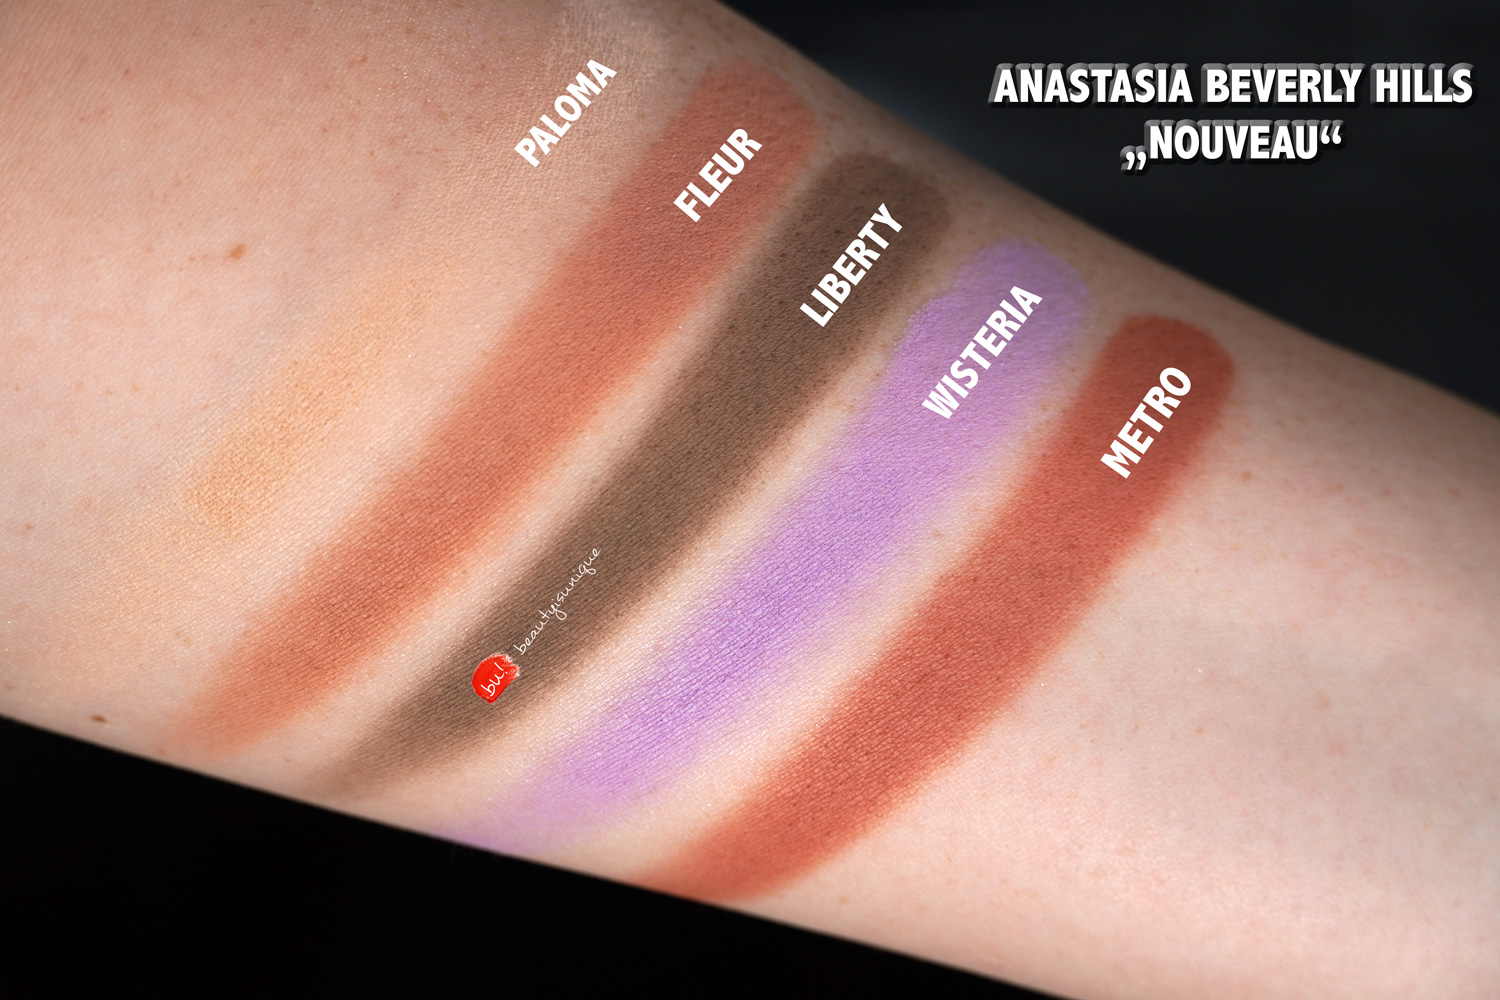 Anastasia-beverly-hills-nouveau-palette-swatches